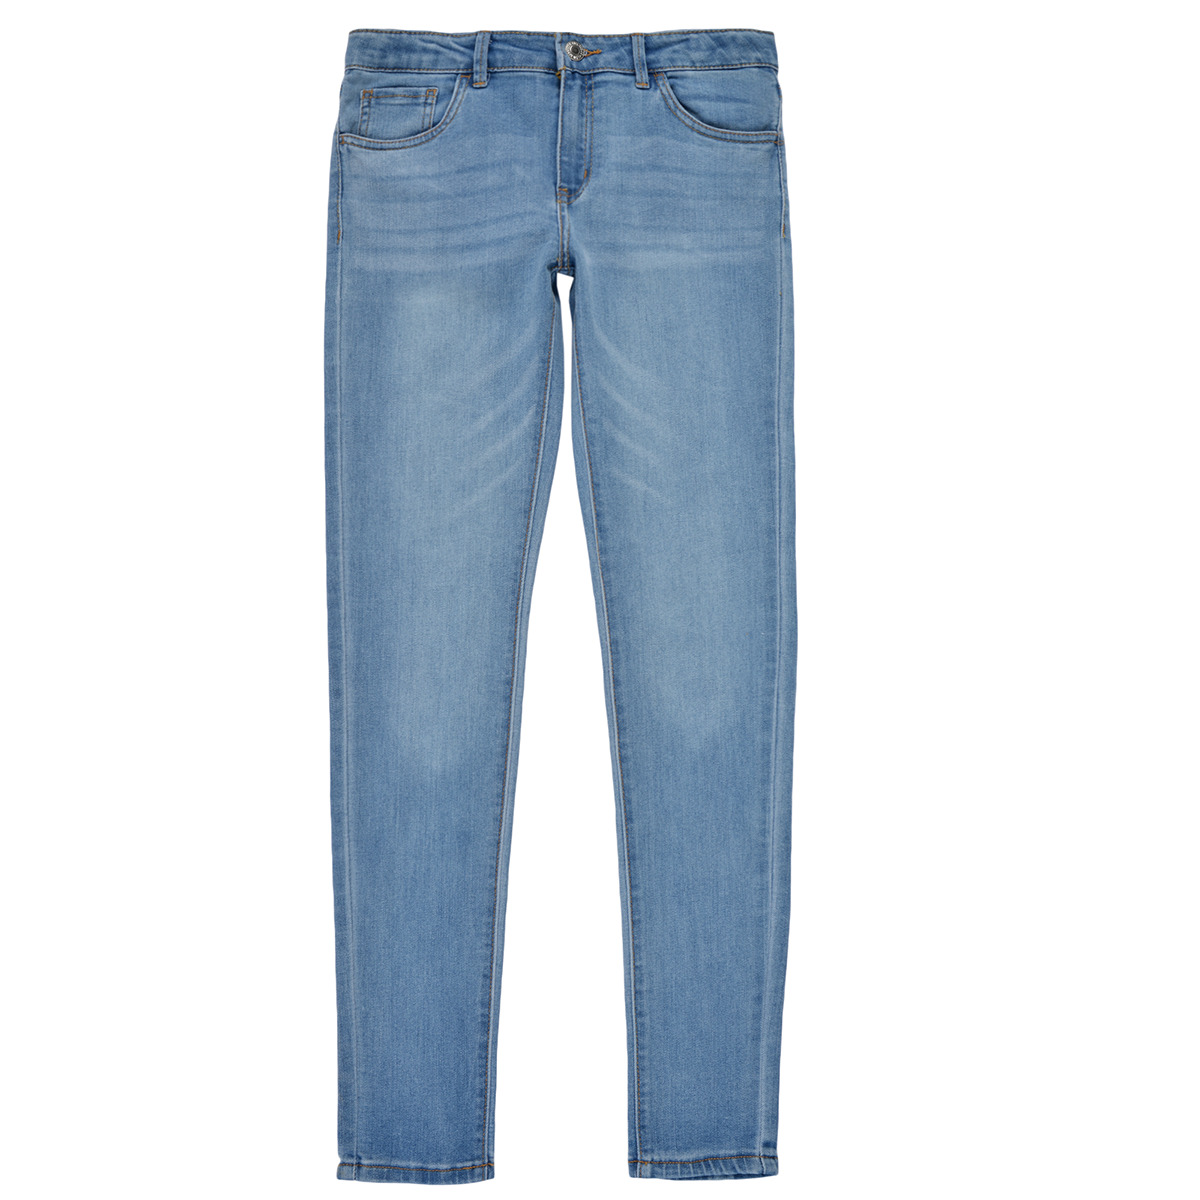 Skinny Jeans Levis  710 SUPER SKINNY